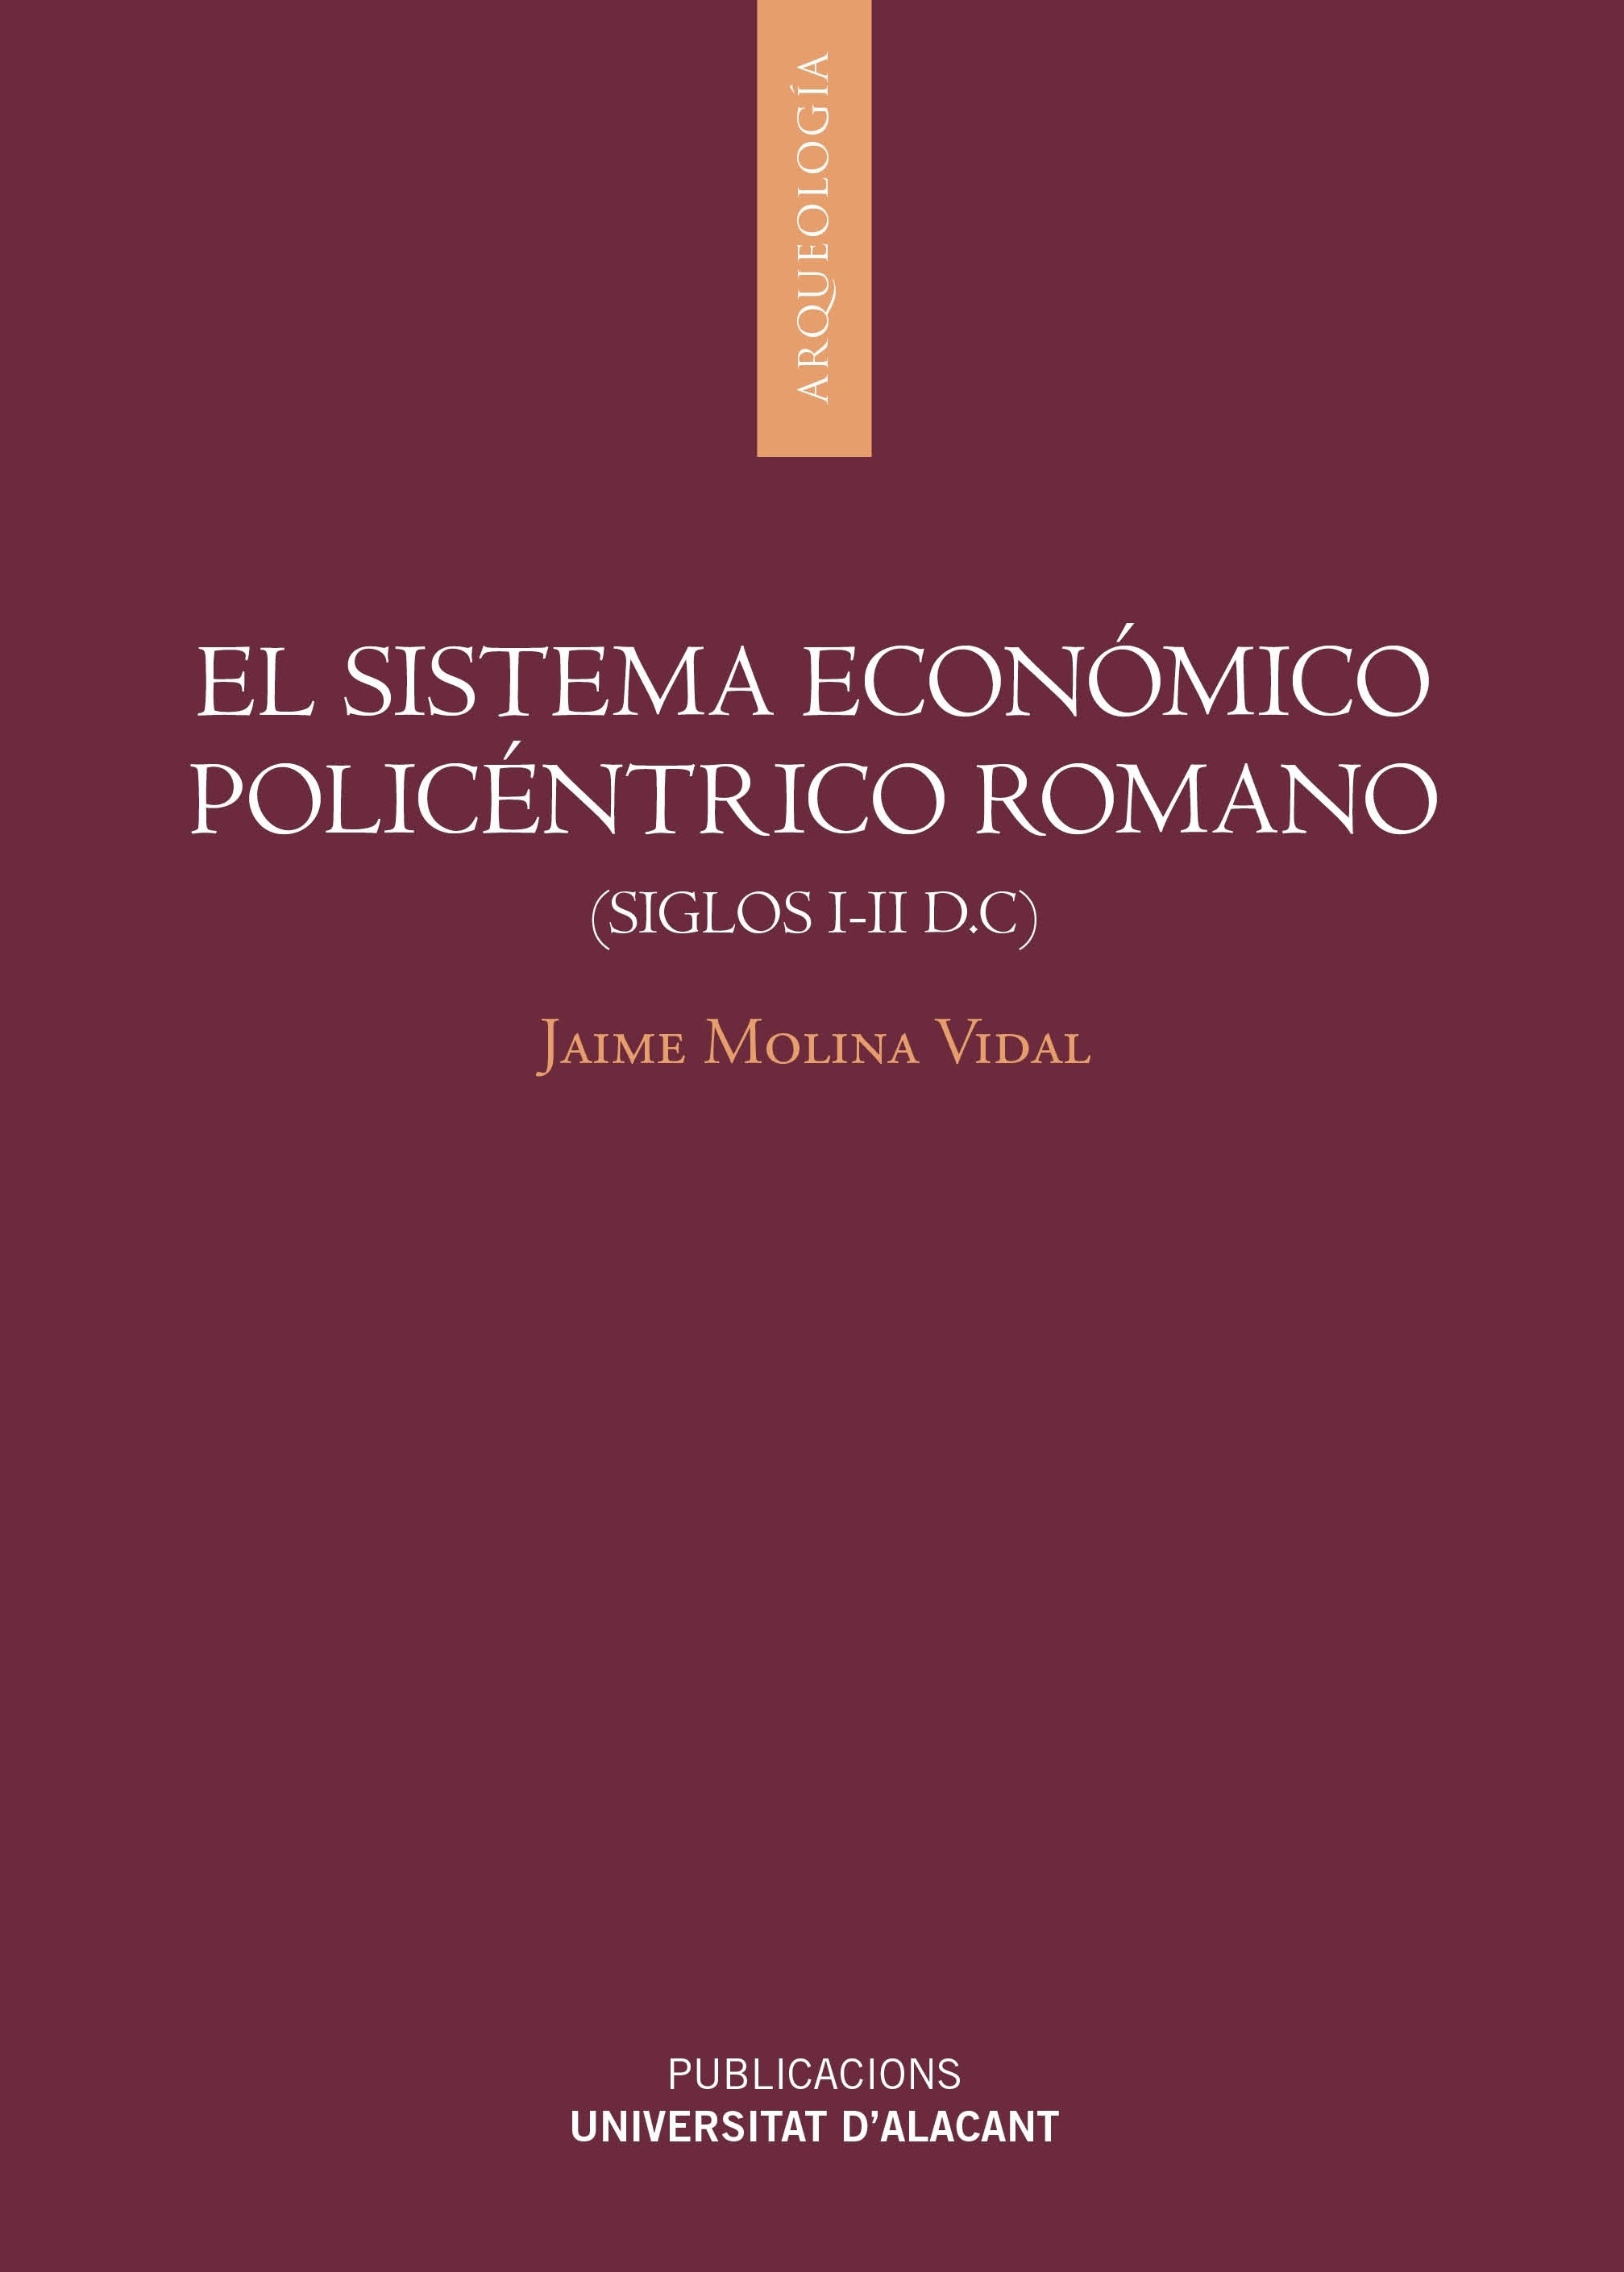 El sistema econÃ³mico policÃ©ntrico romano (siglos I-II d.C)